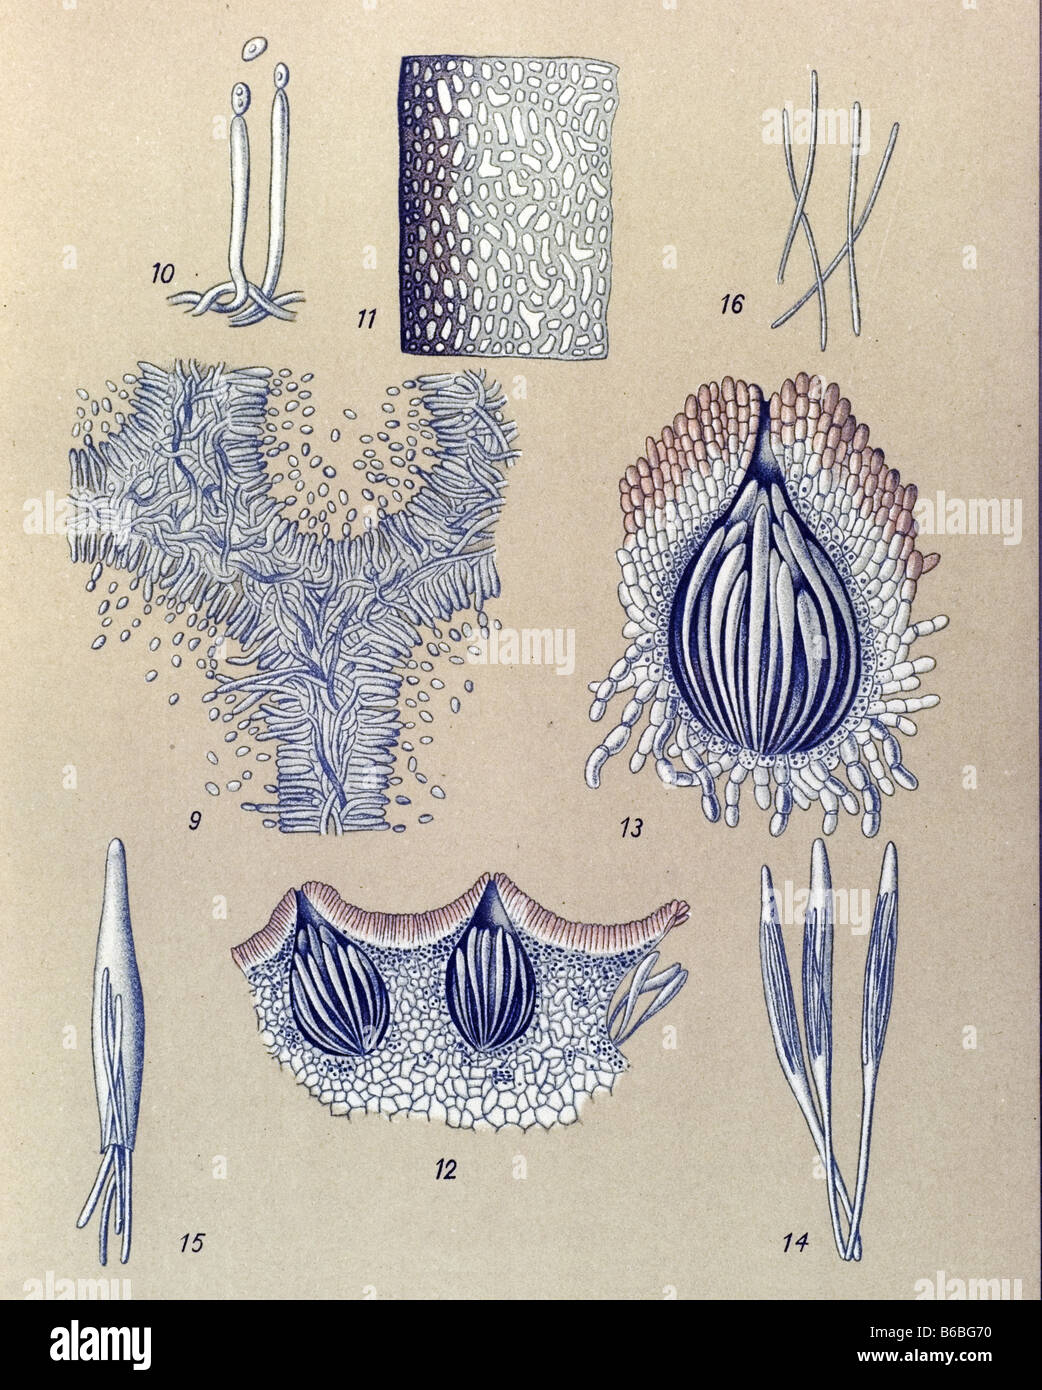 Ergot, poisonous parasitic mushrooms fungi illustrations Stock Photo